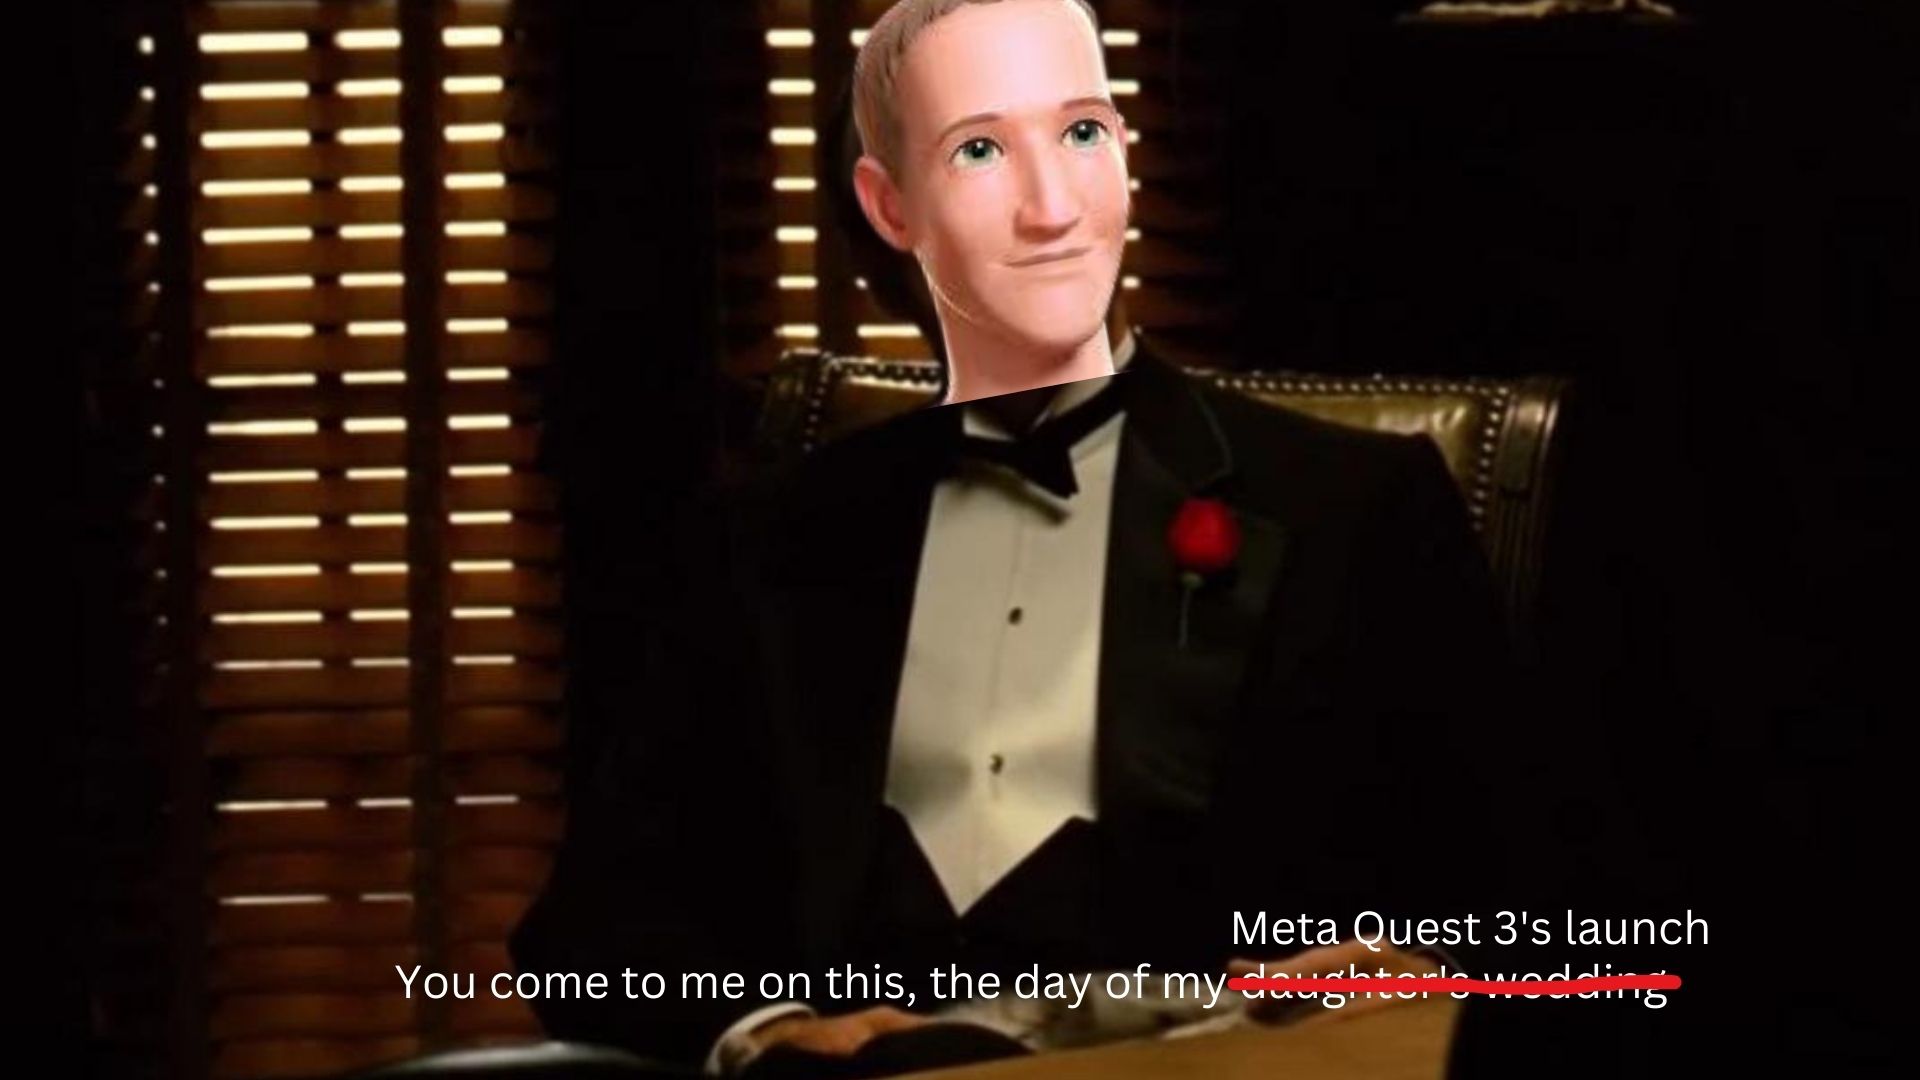 Godfather meme with Mark Zuckerberg's face